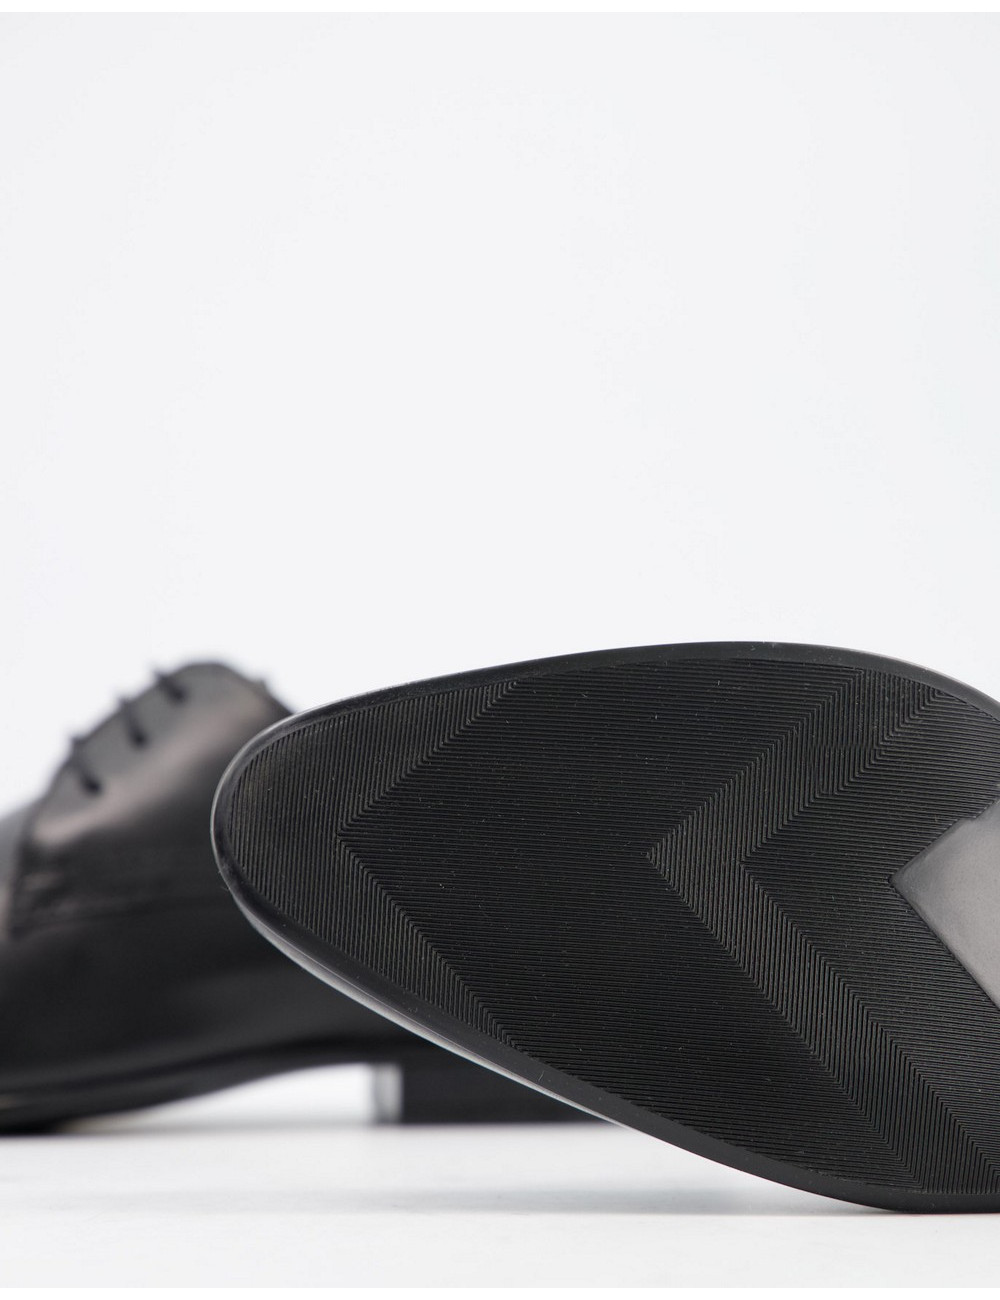 Burton Menswear smart shoe...